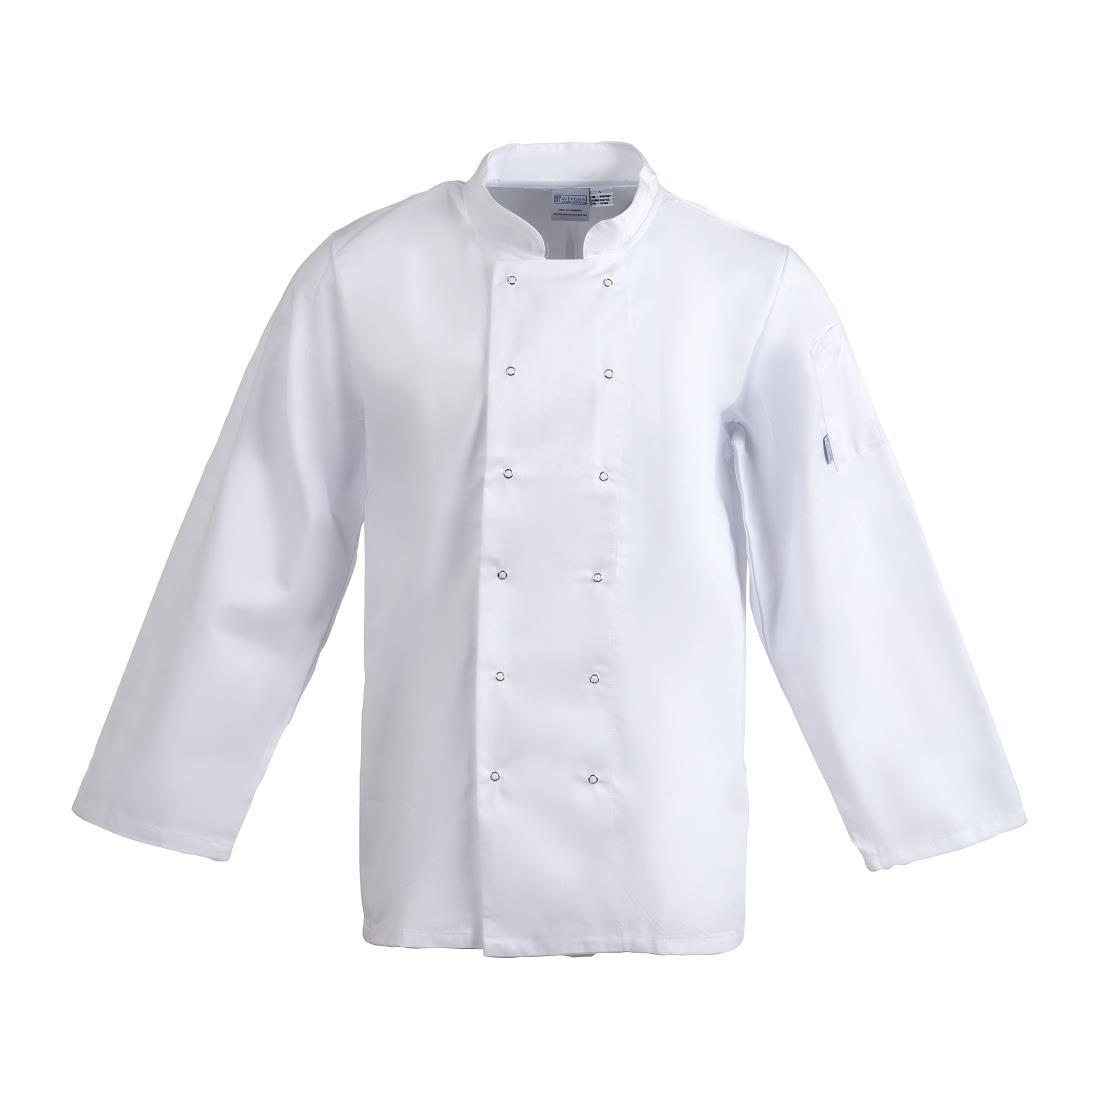 Whites Vegas Unisex Chefs Jacket Long Sleeve White 4XL - A134-4XL  - 1